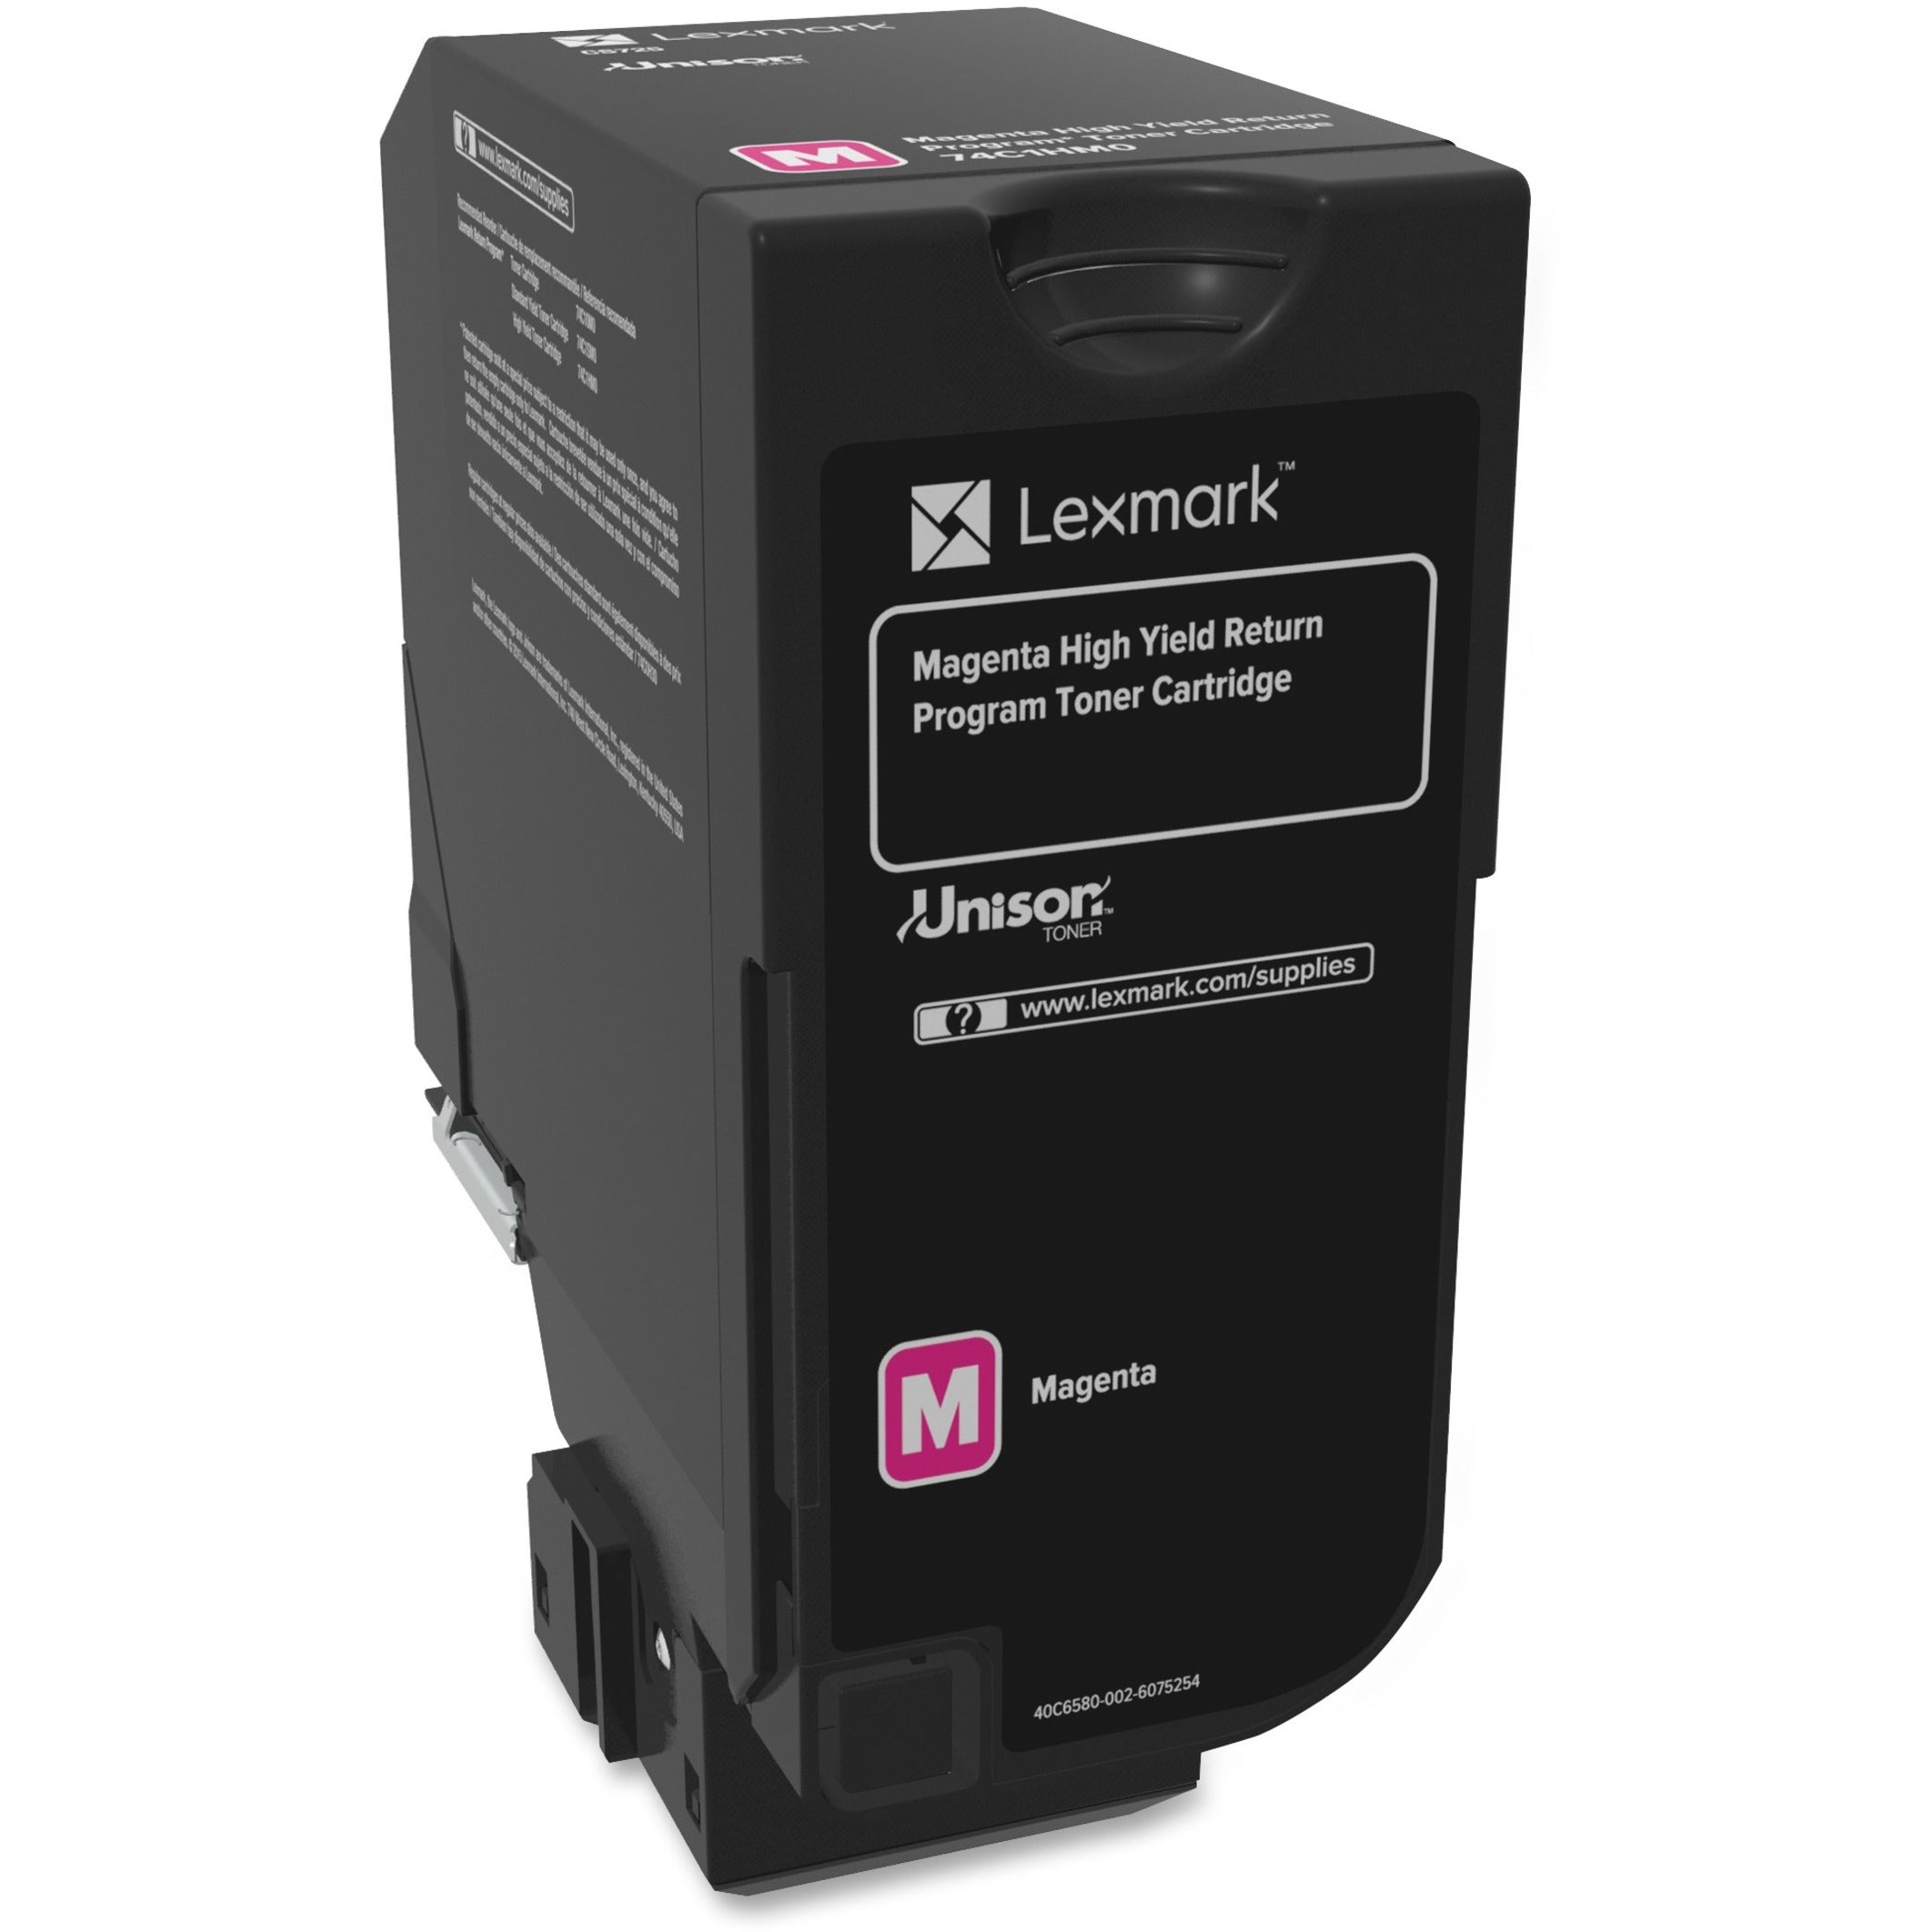 Lexmark 74C1HM0 Unison CS725 Return Program High Yield Toner Cartridge, Magenta, 12,000 Pages